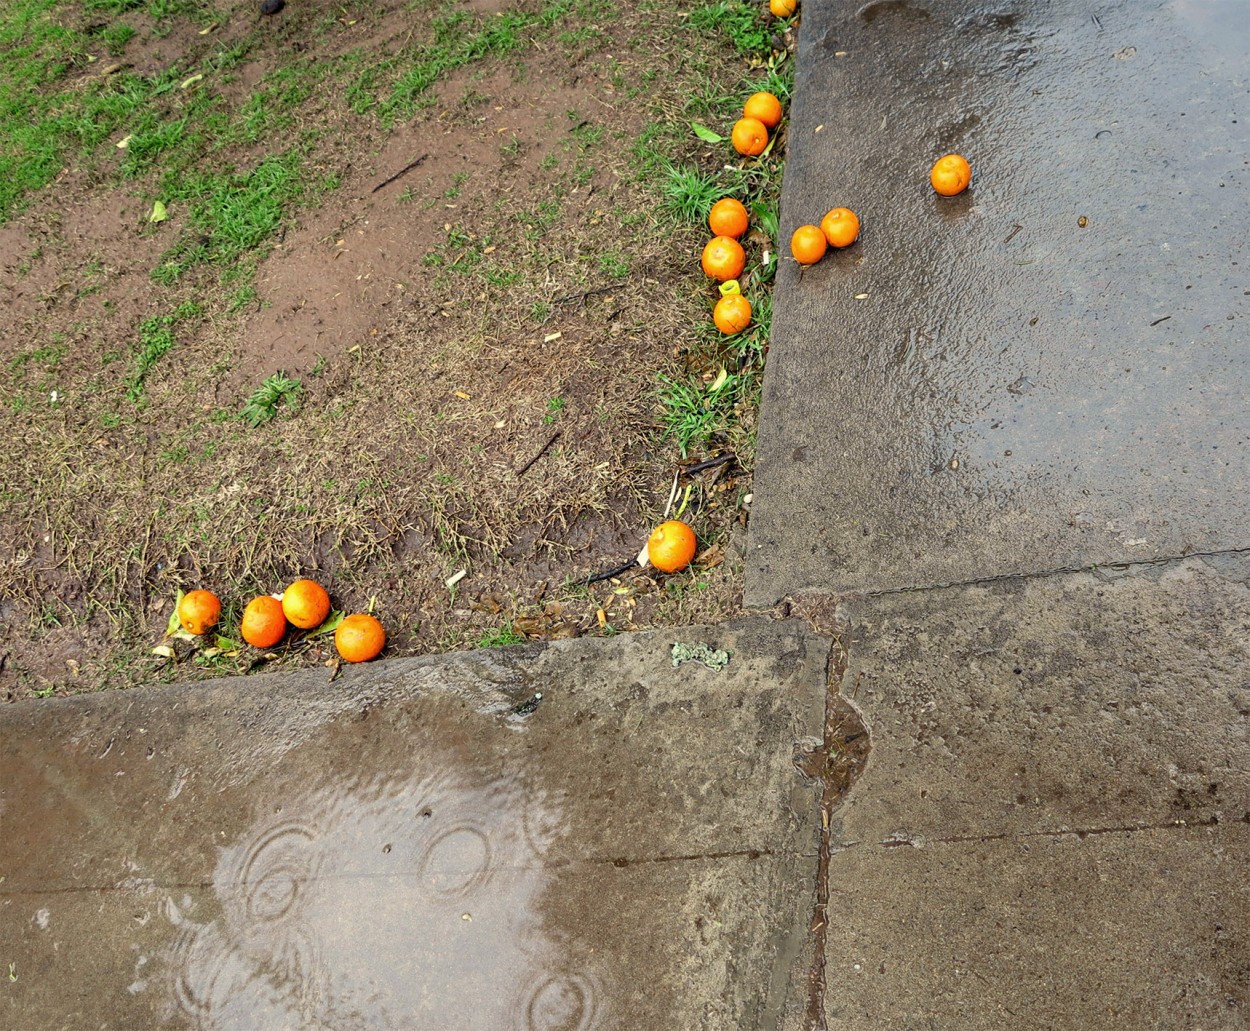 "naranjas bajo la lluvia" de Vernica Dana